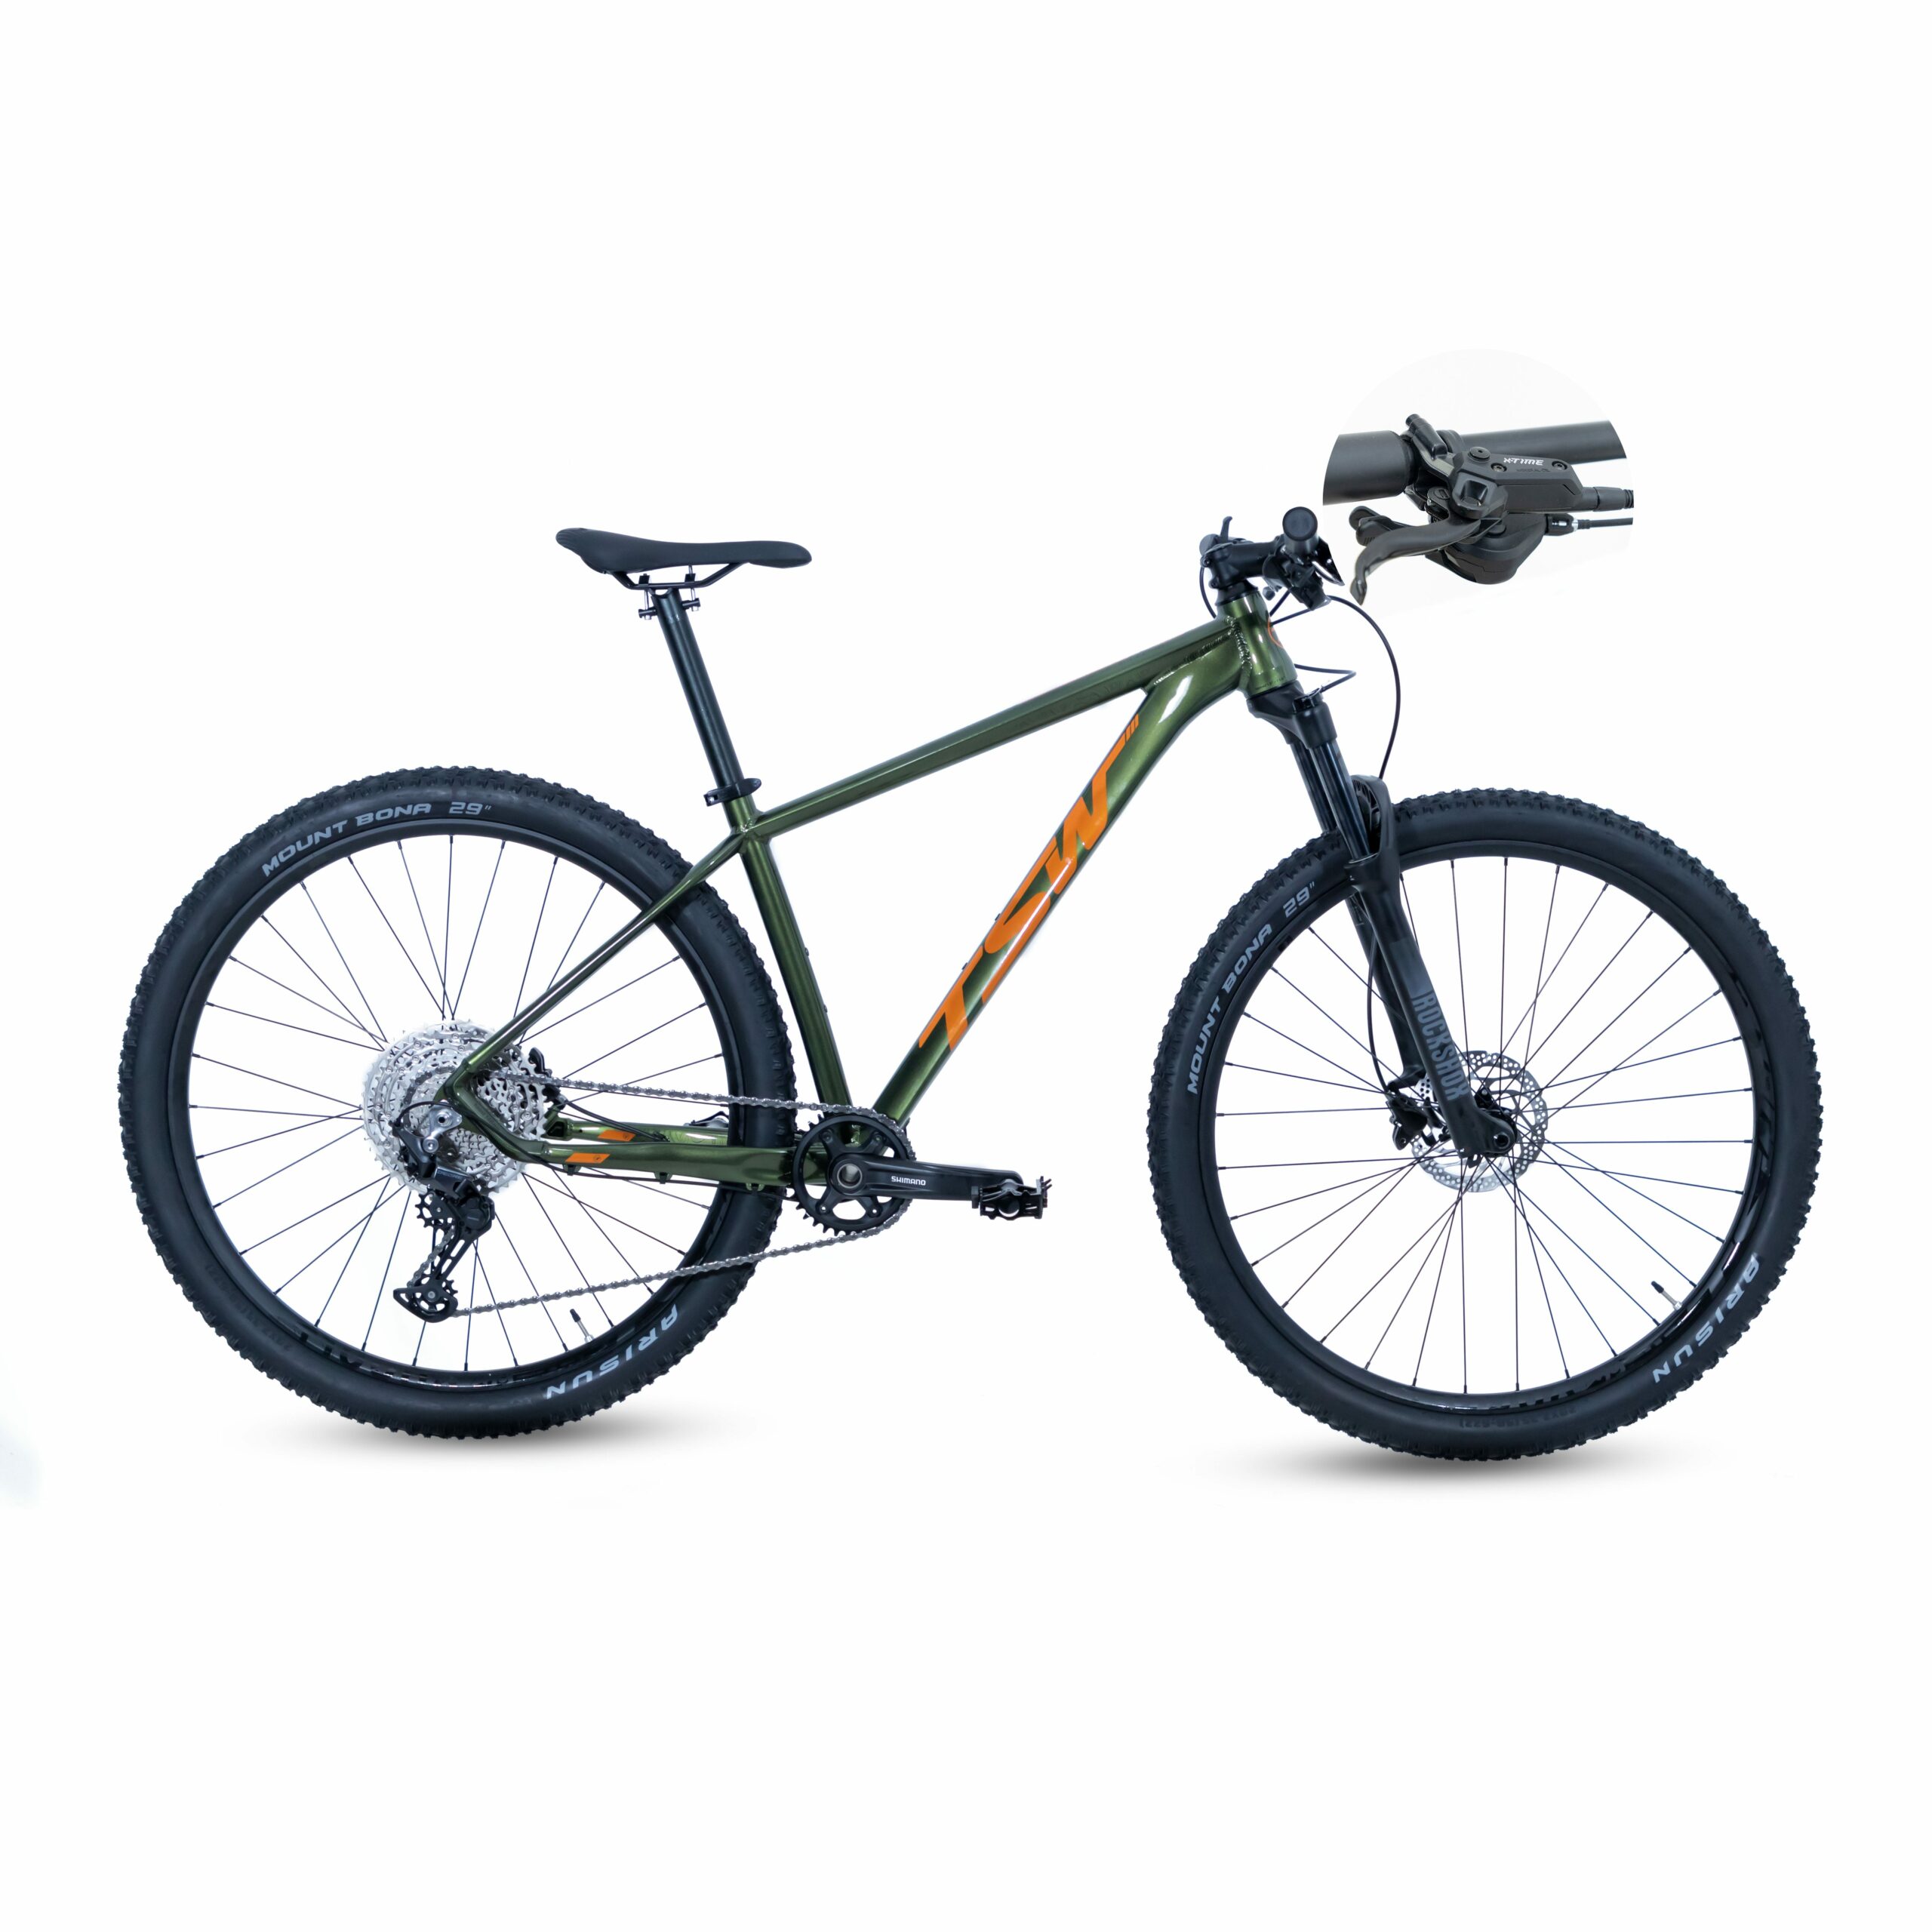 Bicicleta TSW Yukon - Freio X-Time | SH-12 | 2021/2022 - 17.5", Verde/Laranja